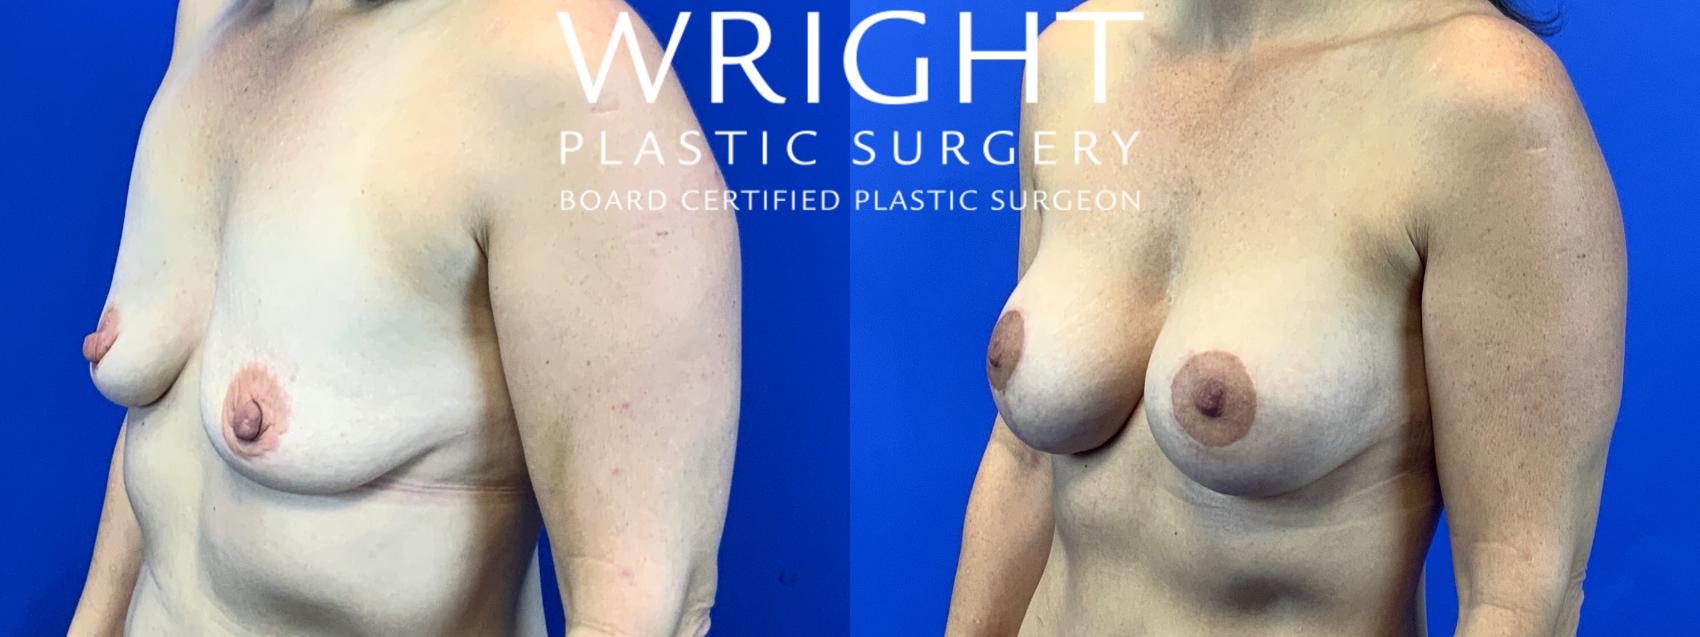 Before & After Breast Augmentation Case 131 Left Oblique View in Little Rock, Arkansas